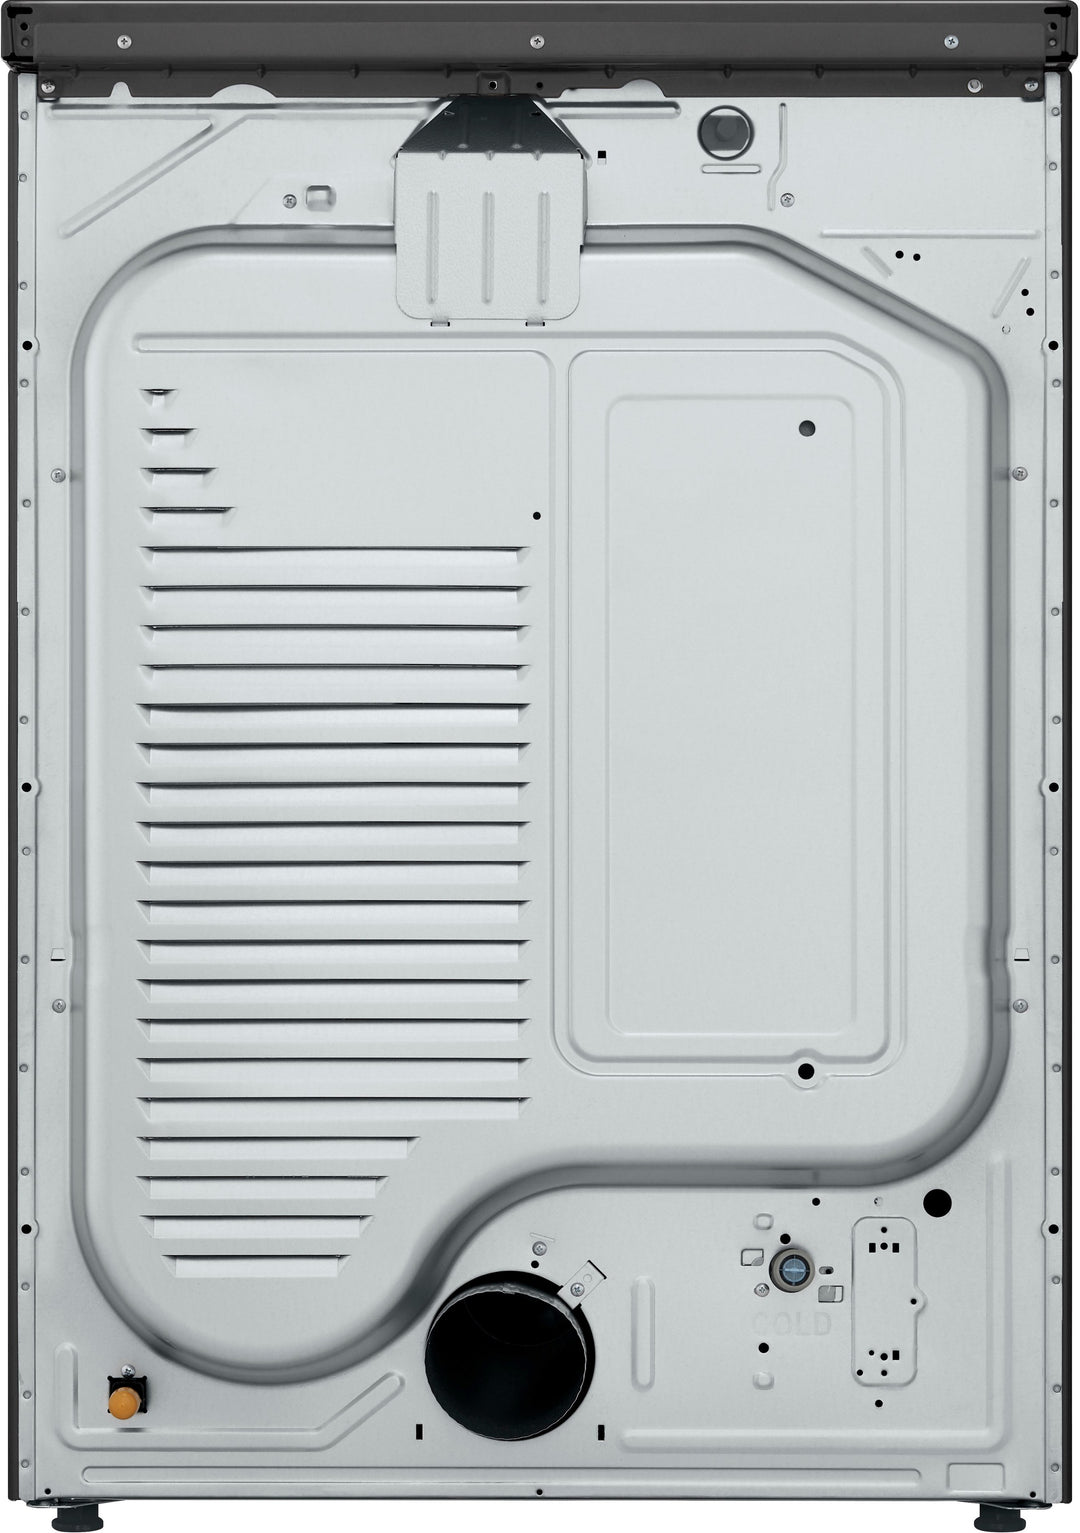 LG - 7.4 Cu. Ft. Stackable Smart Gas Dryer with TurboSteam - Black steel_10